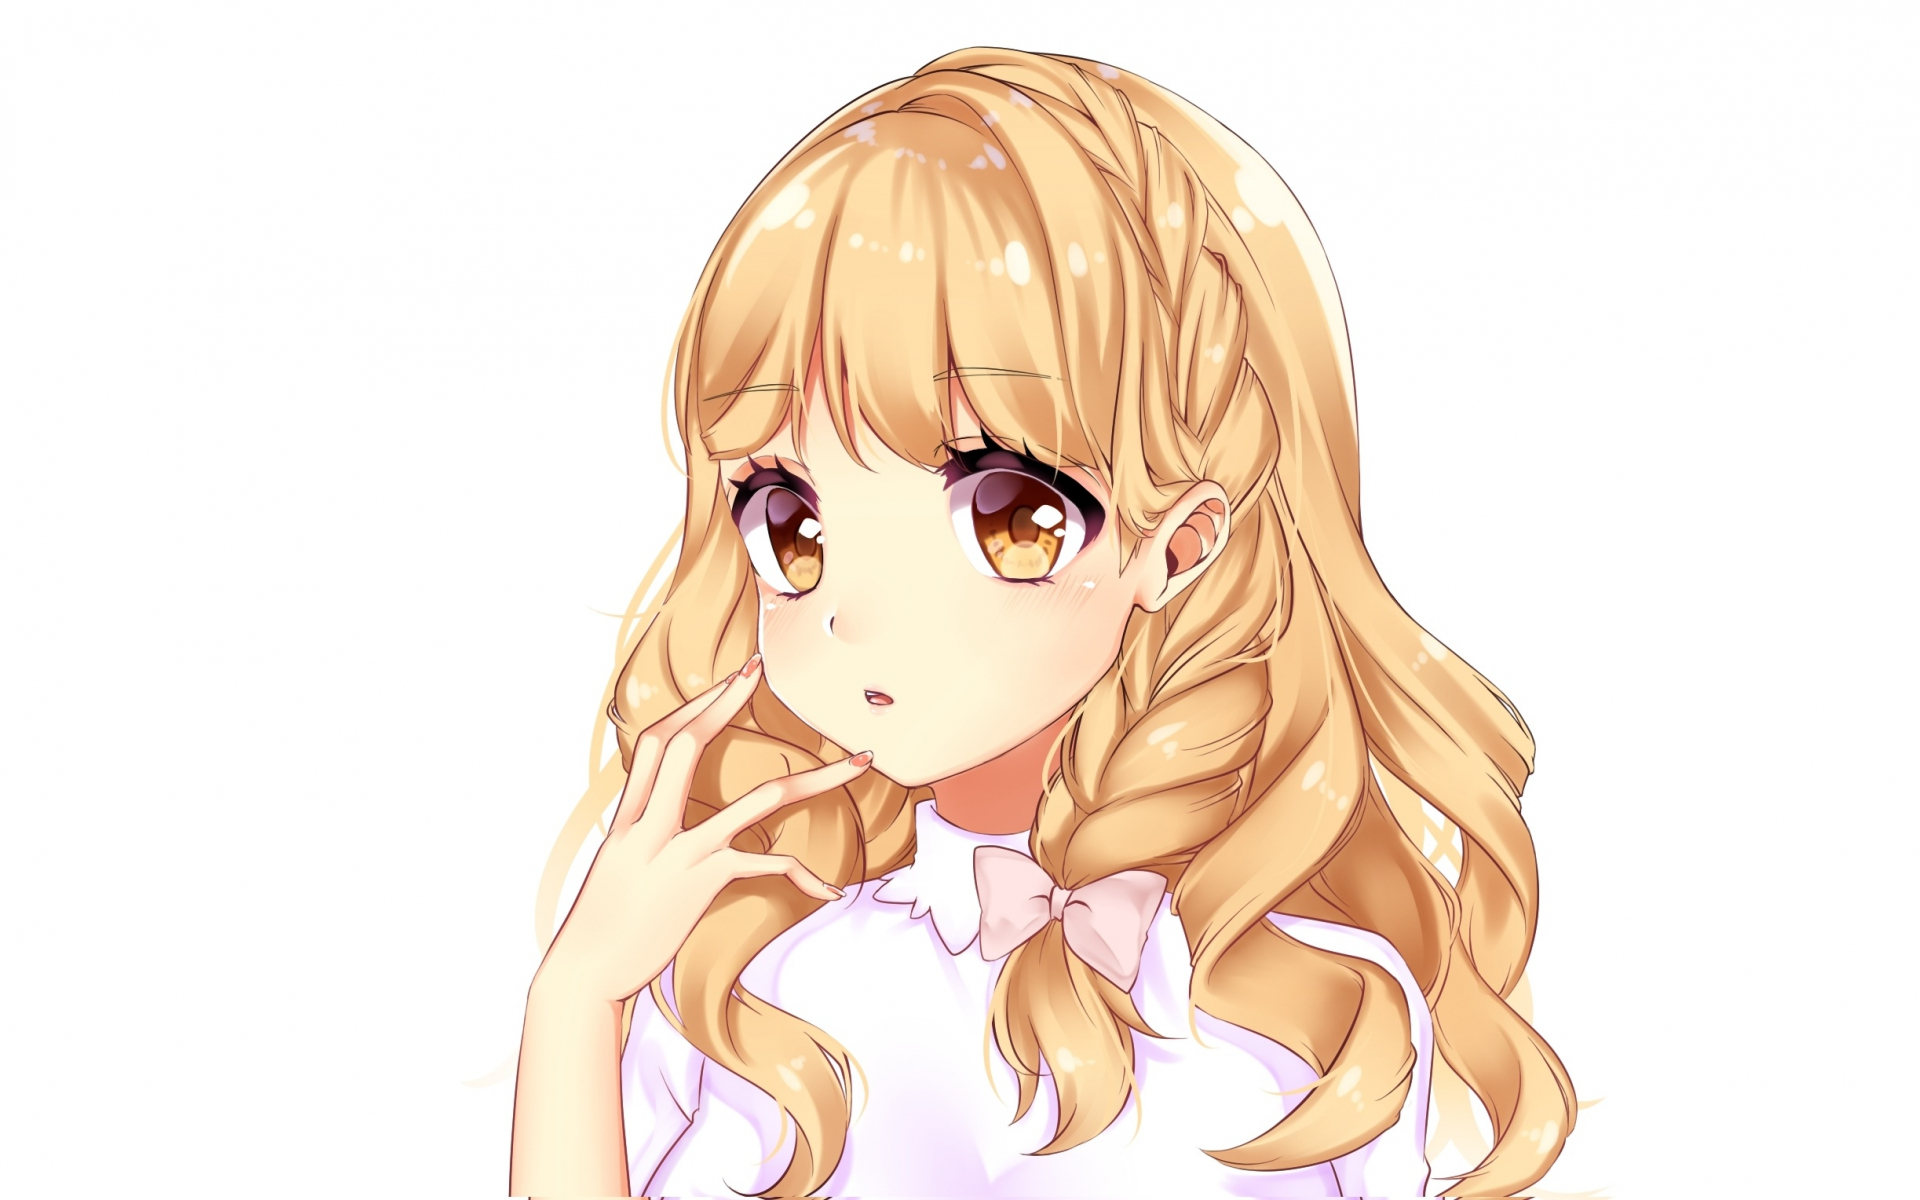 7. "Wavy Blonde Hair Anime Hairstyles" by AnimeLab - wide 2